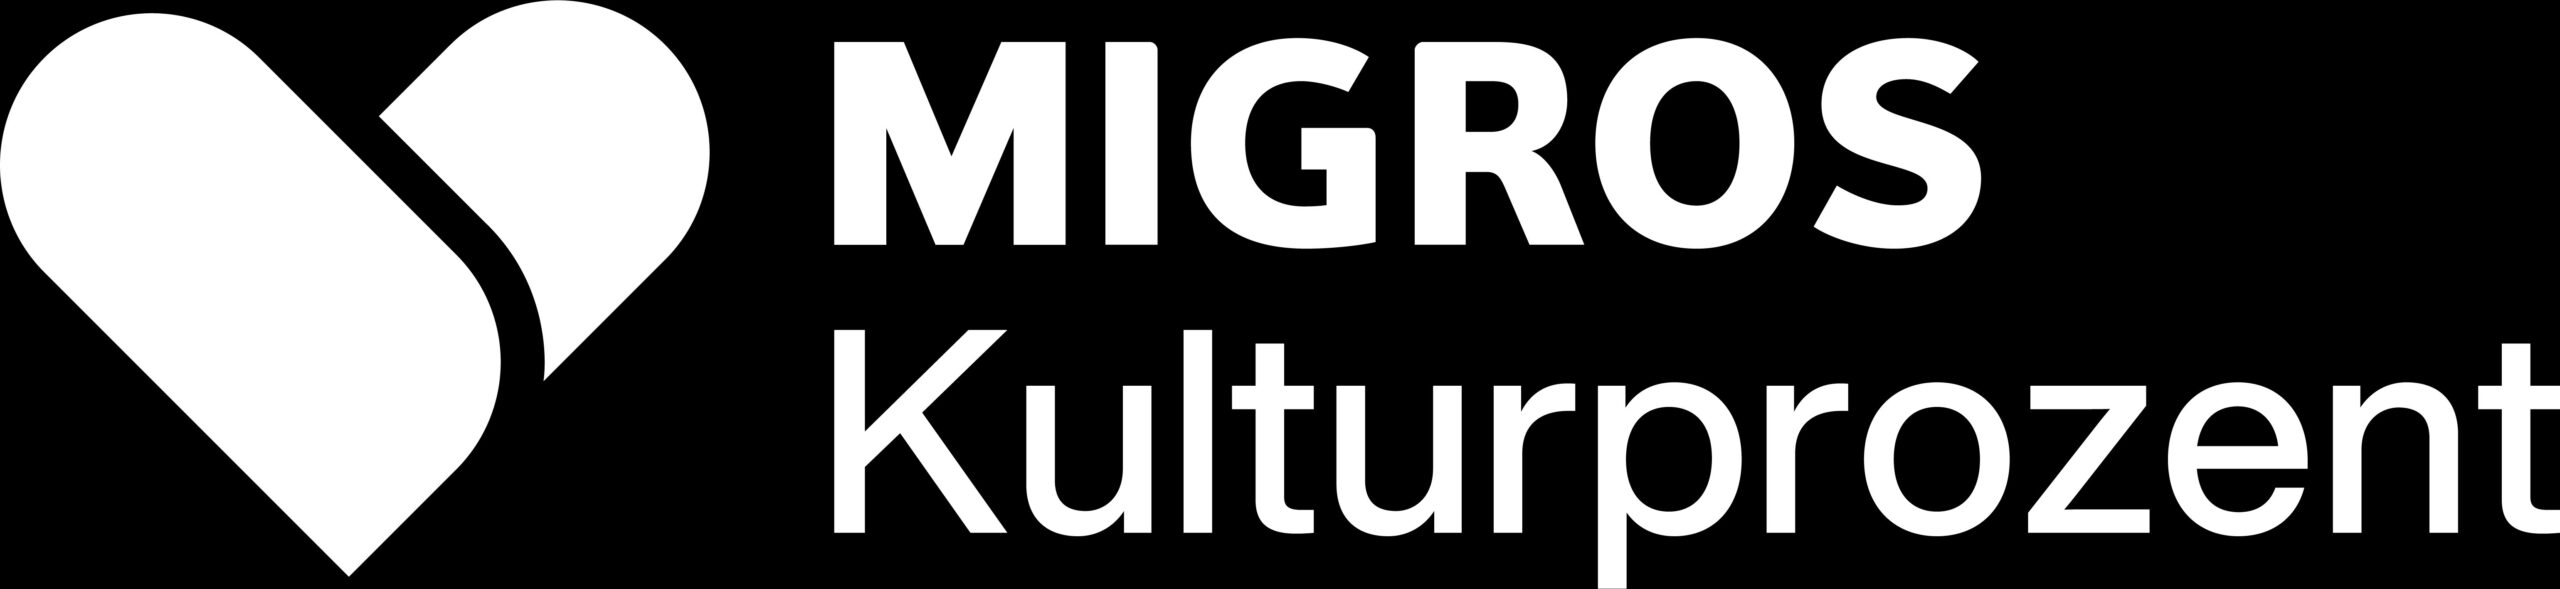 Migros-Kulturprozent_Logo_FGE_MK_sw_300dpi_DE-scaled